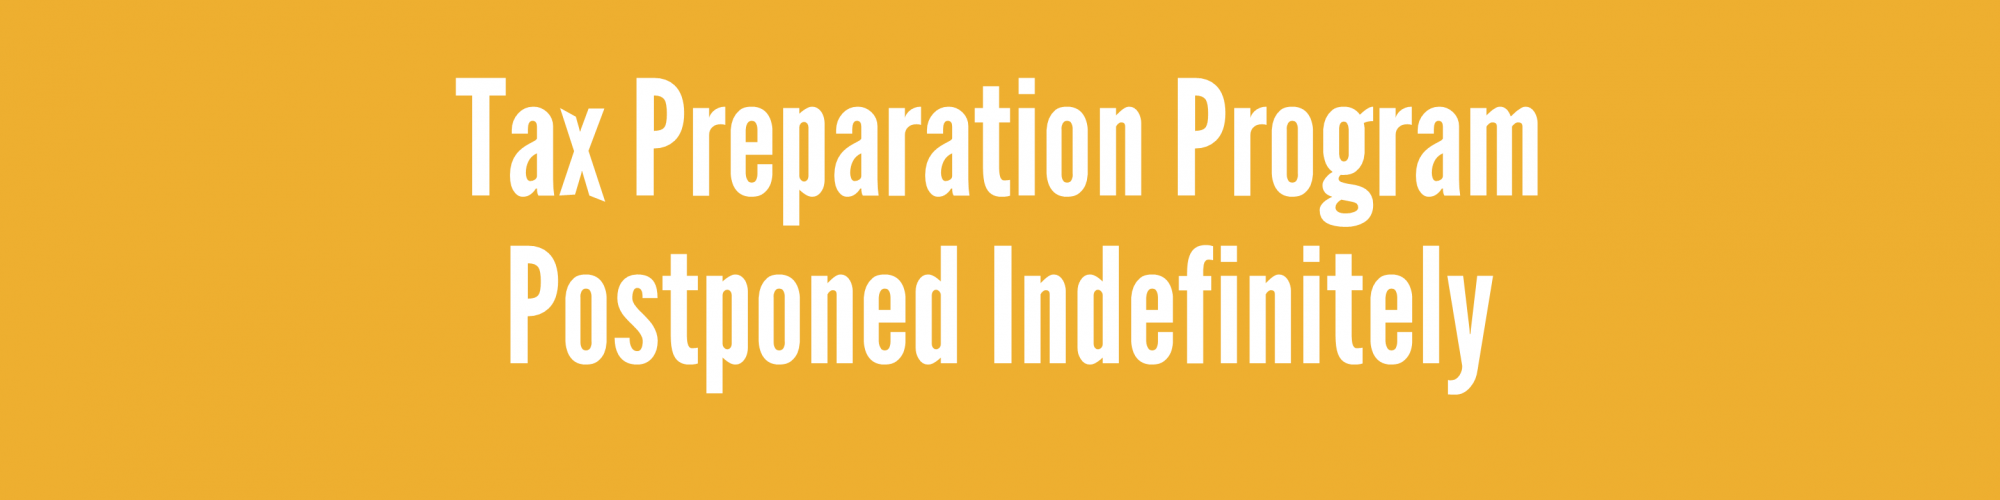 Tax Preparation Program Postponed Indefinitely